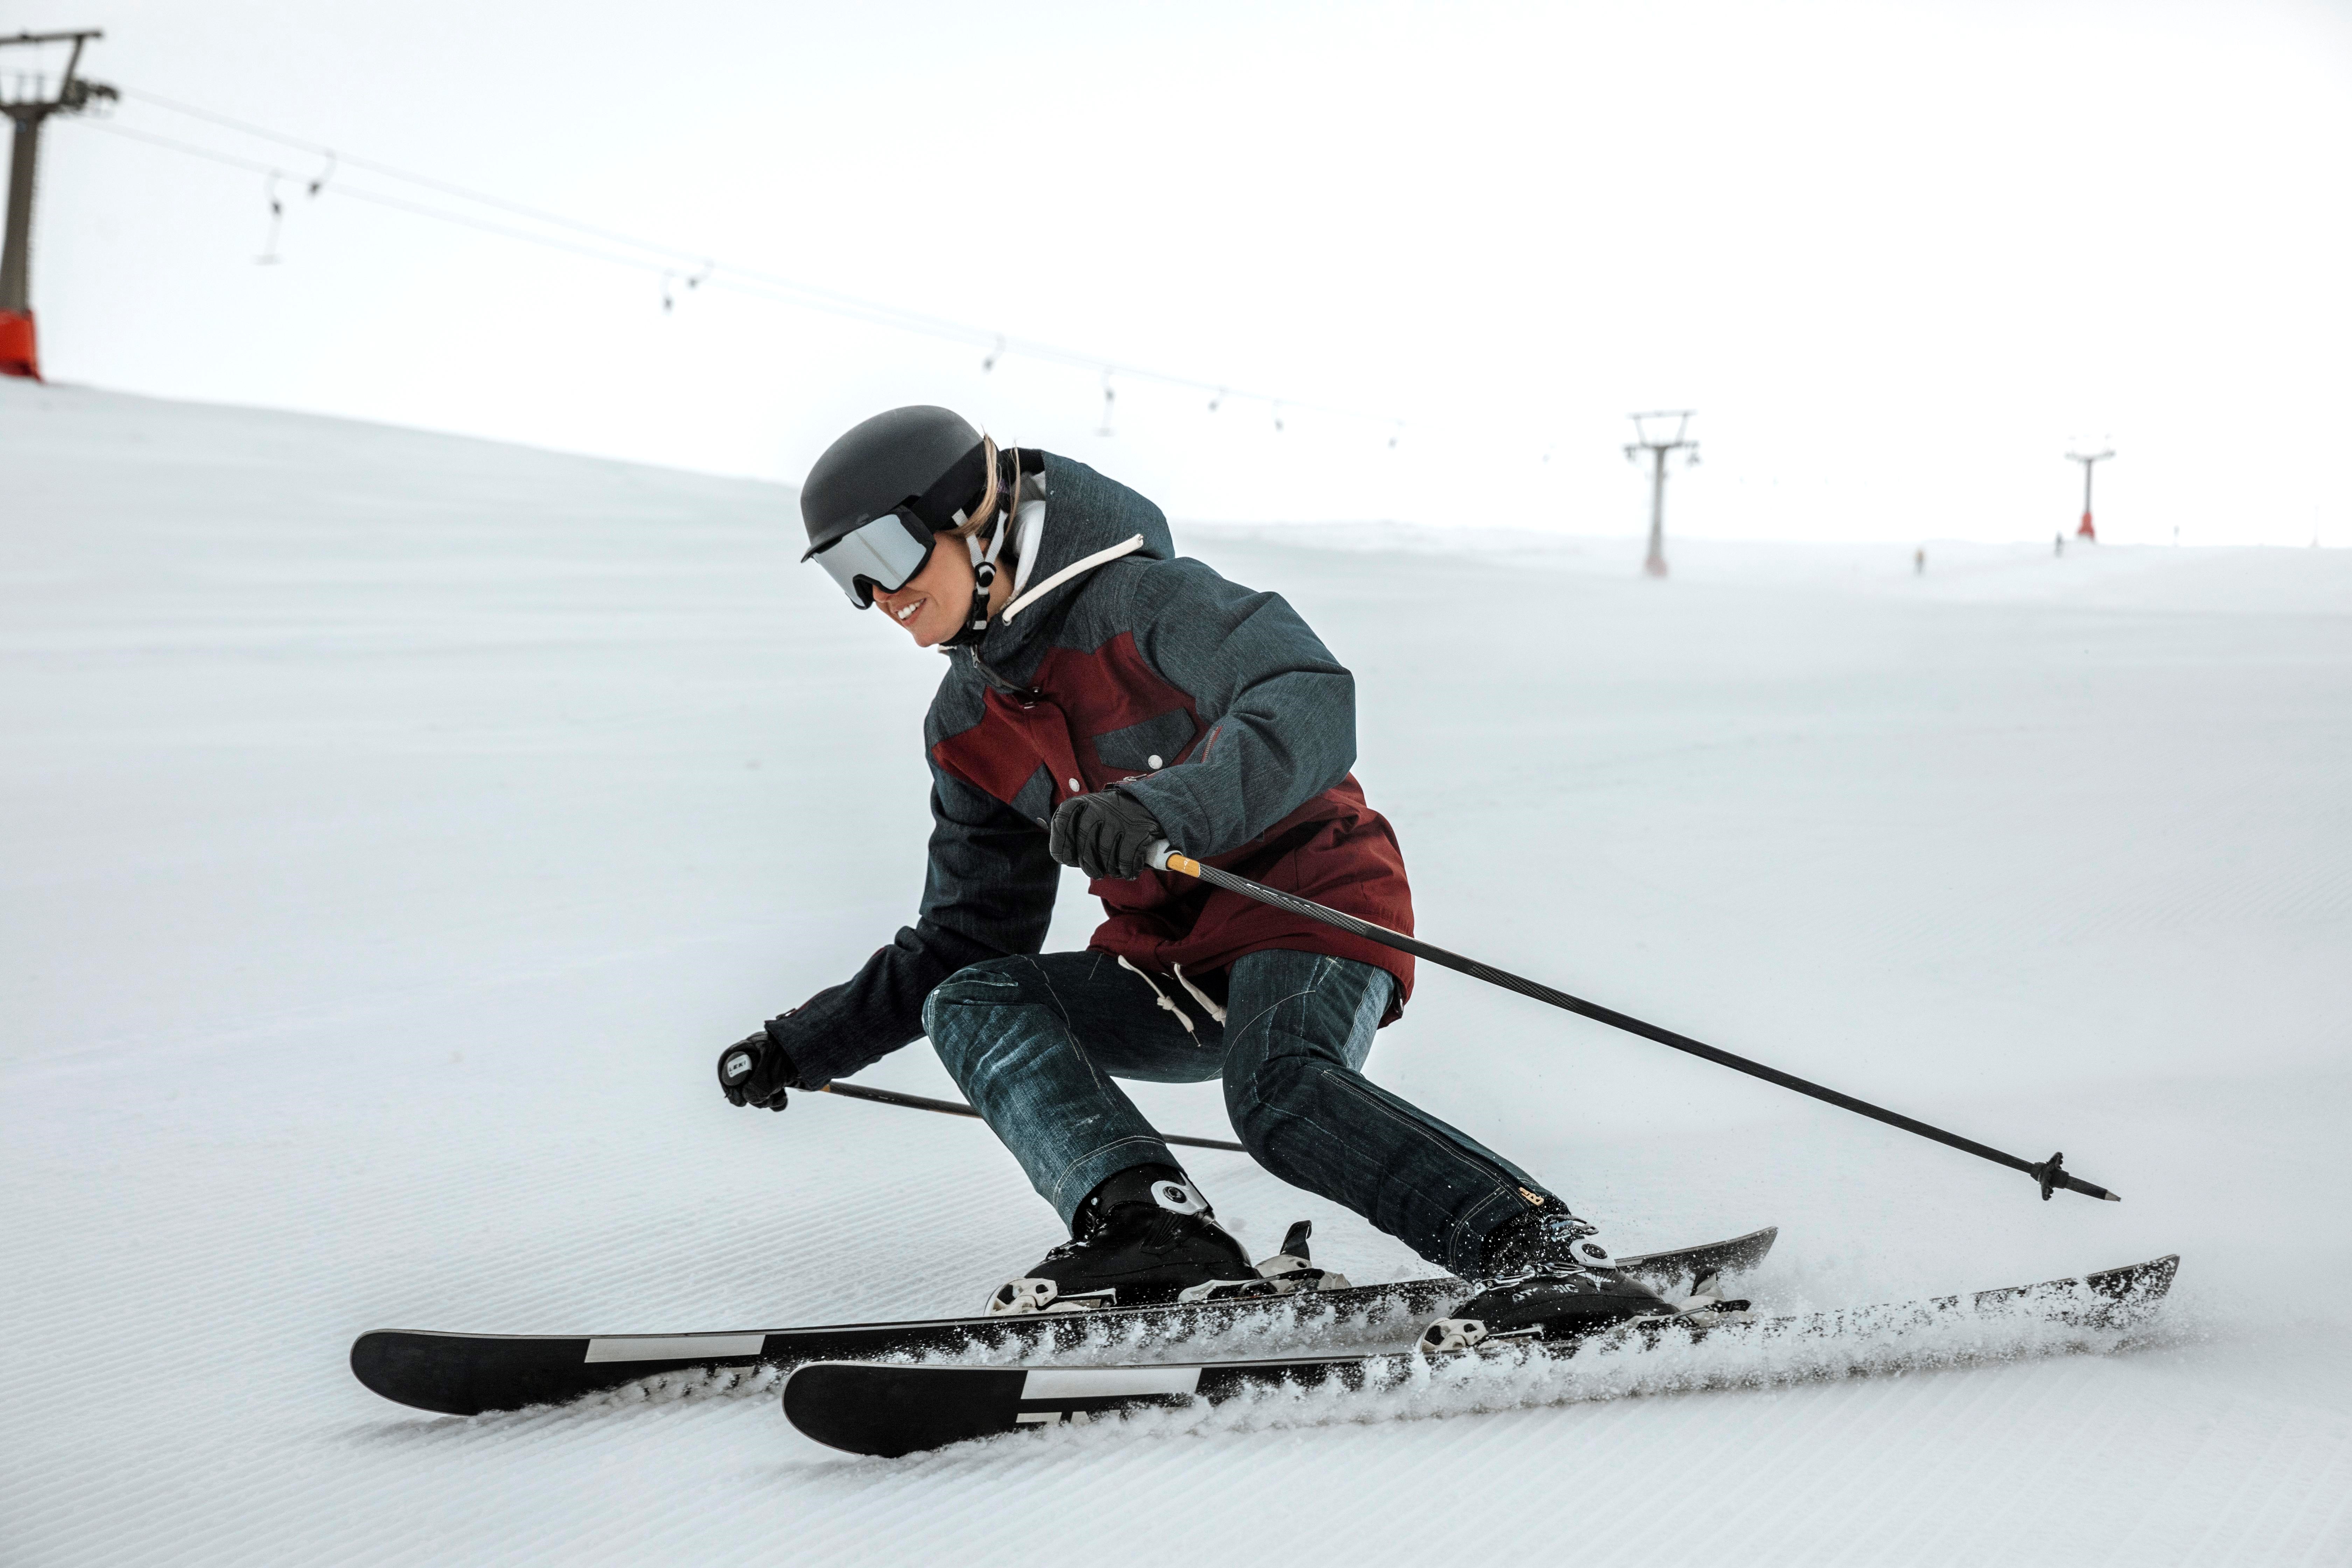 Investigan si esquiar disminuye la ansiedad